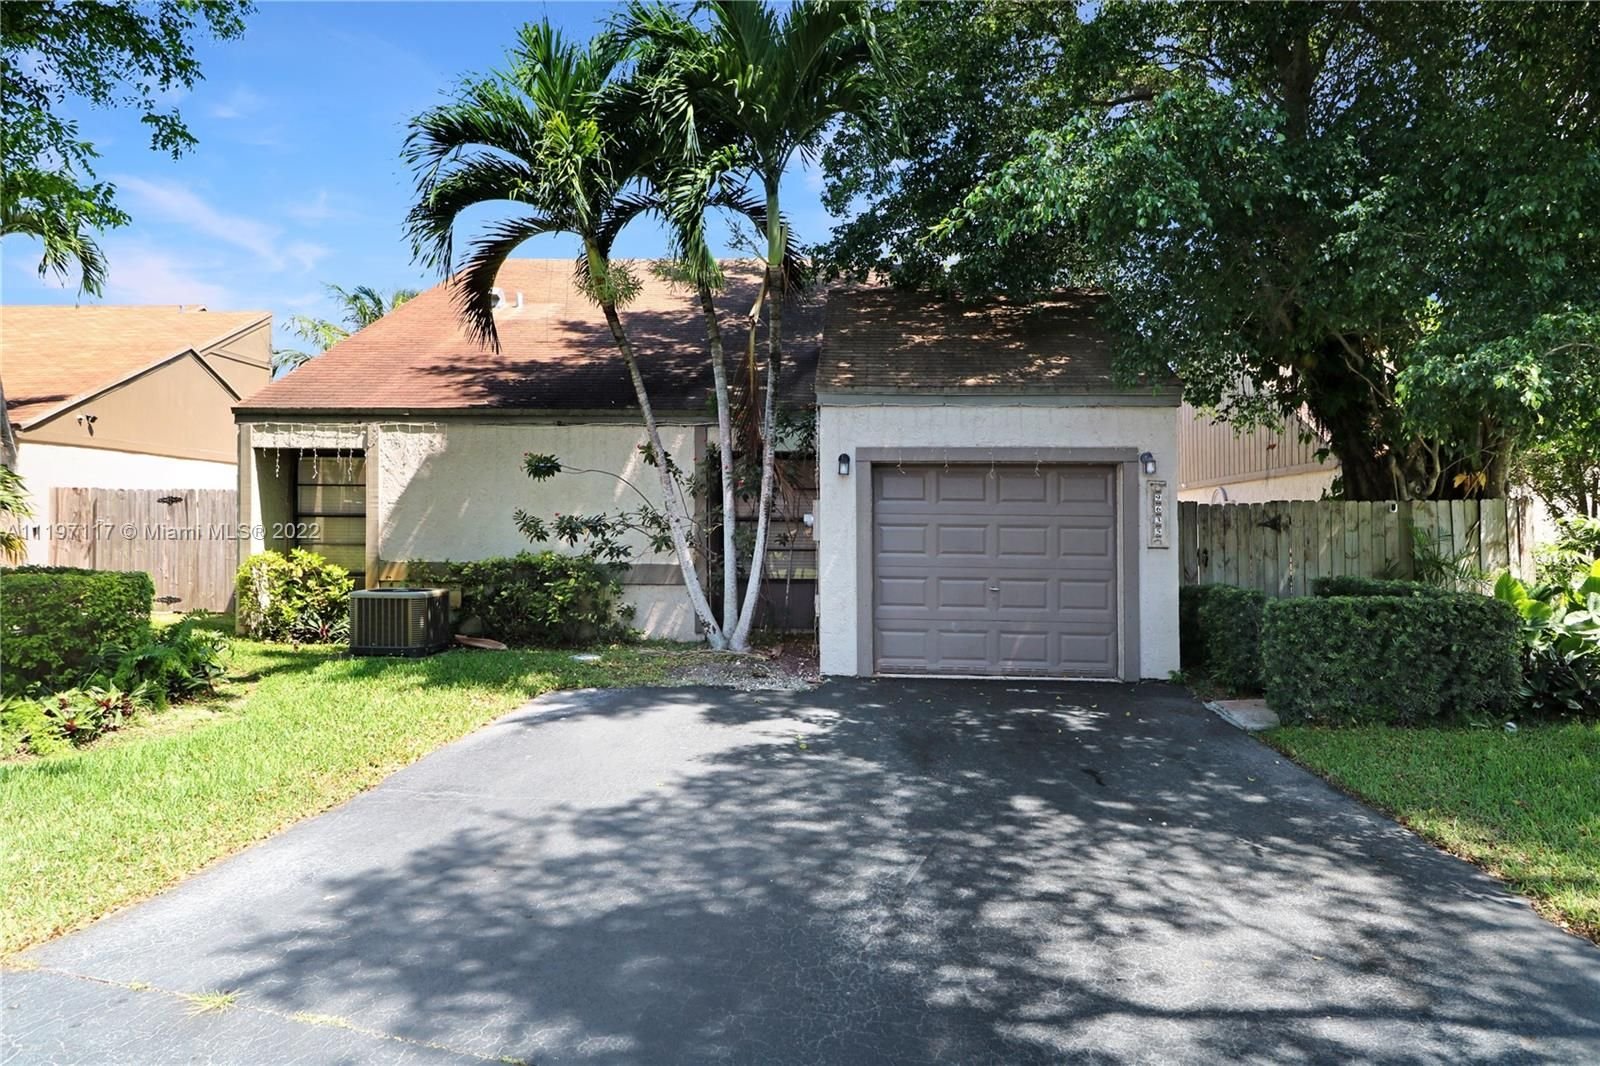 Real estate property located at 9635 74th St, Miami-Dade County, Miami, FL